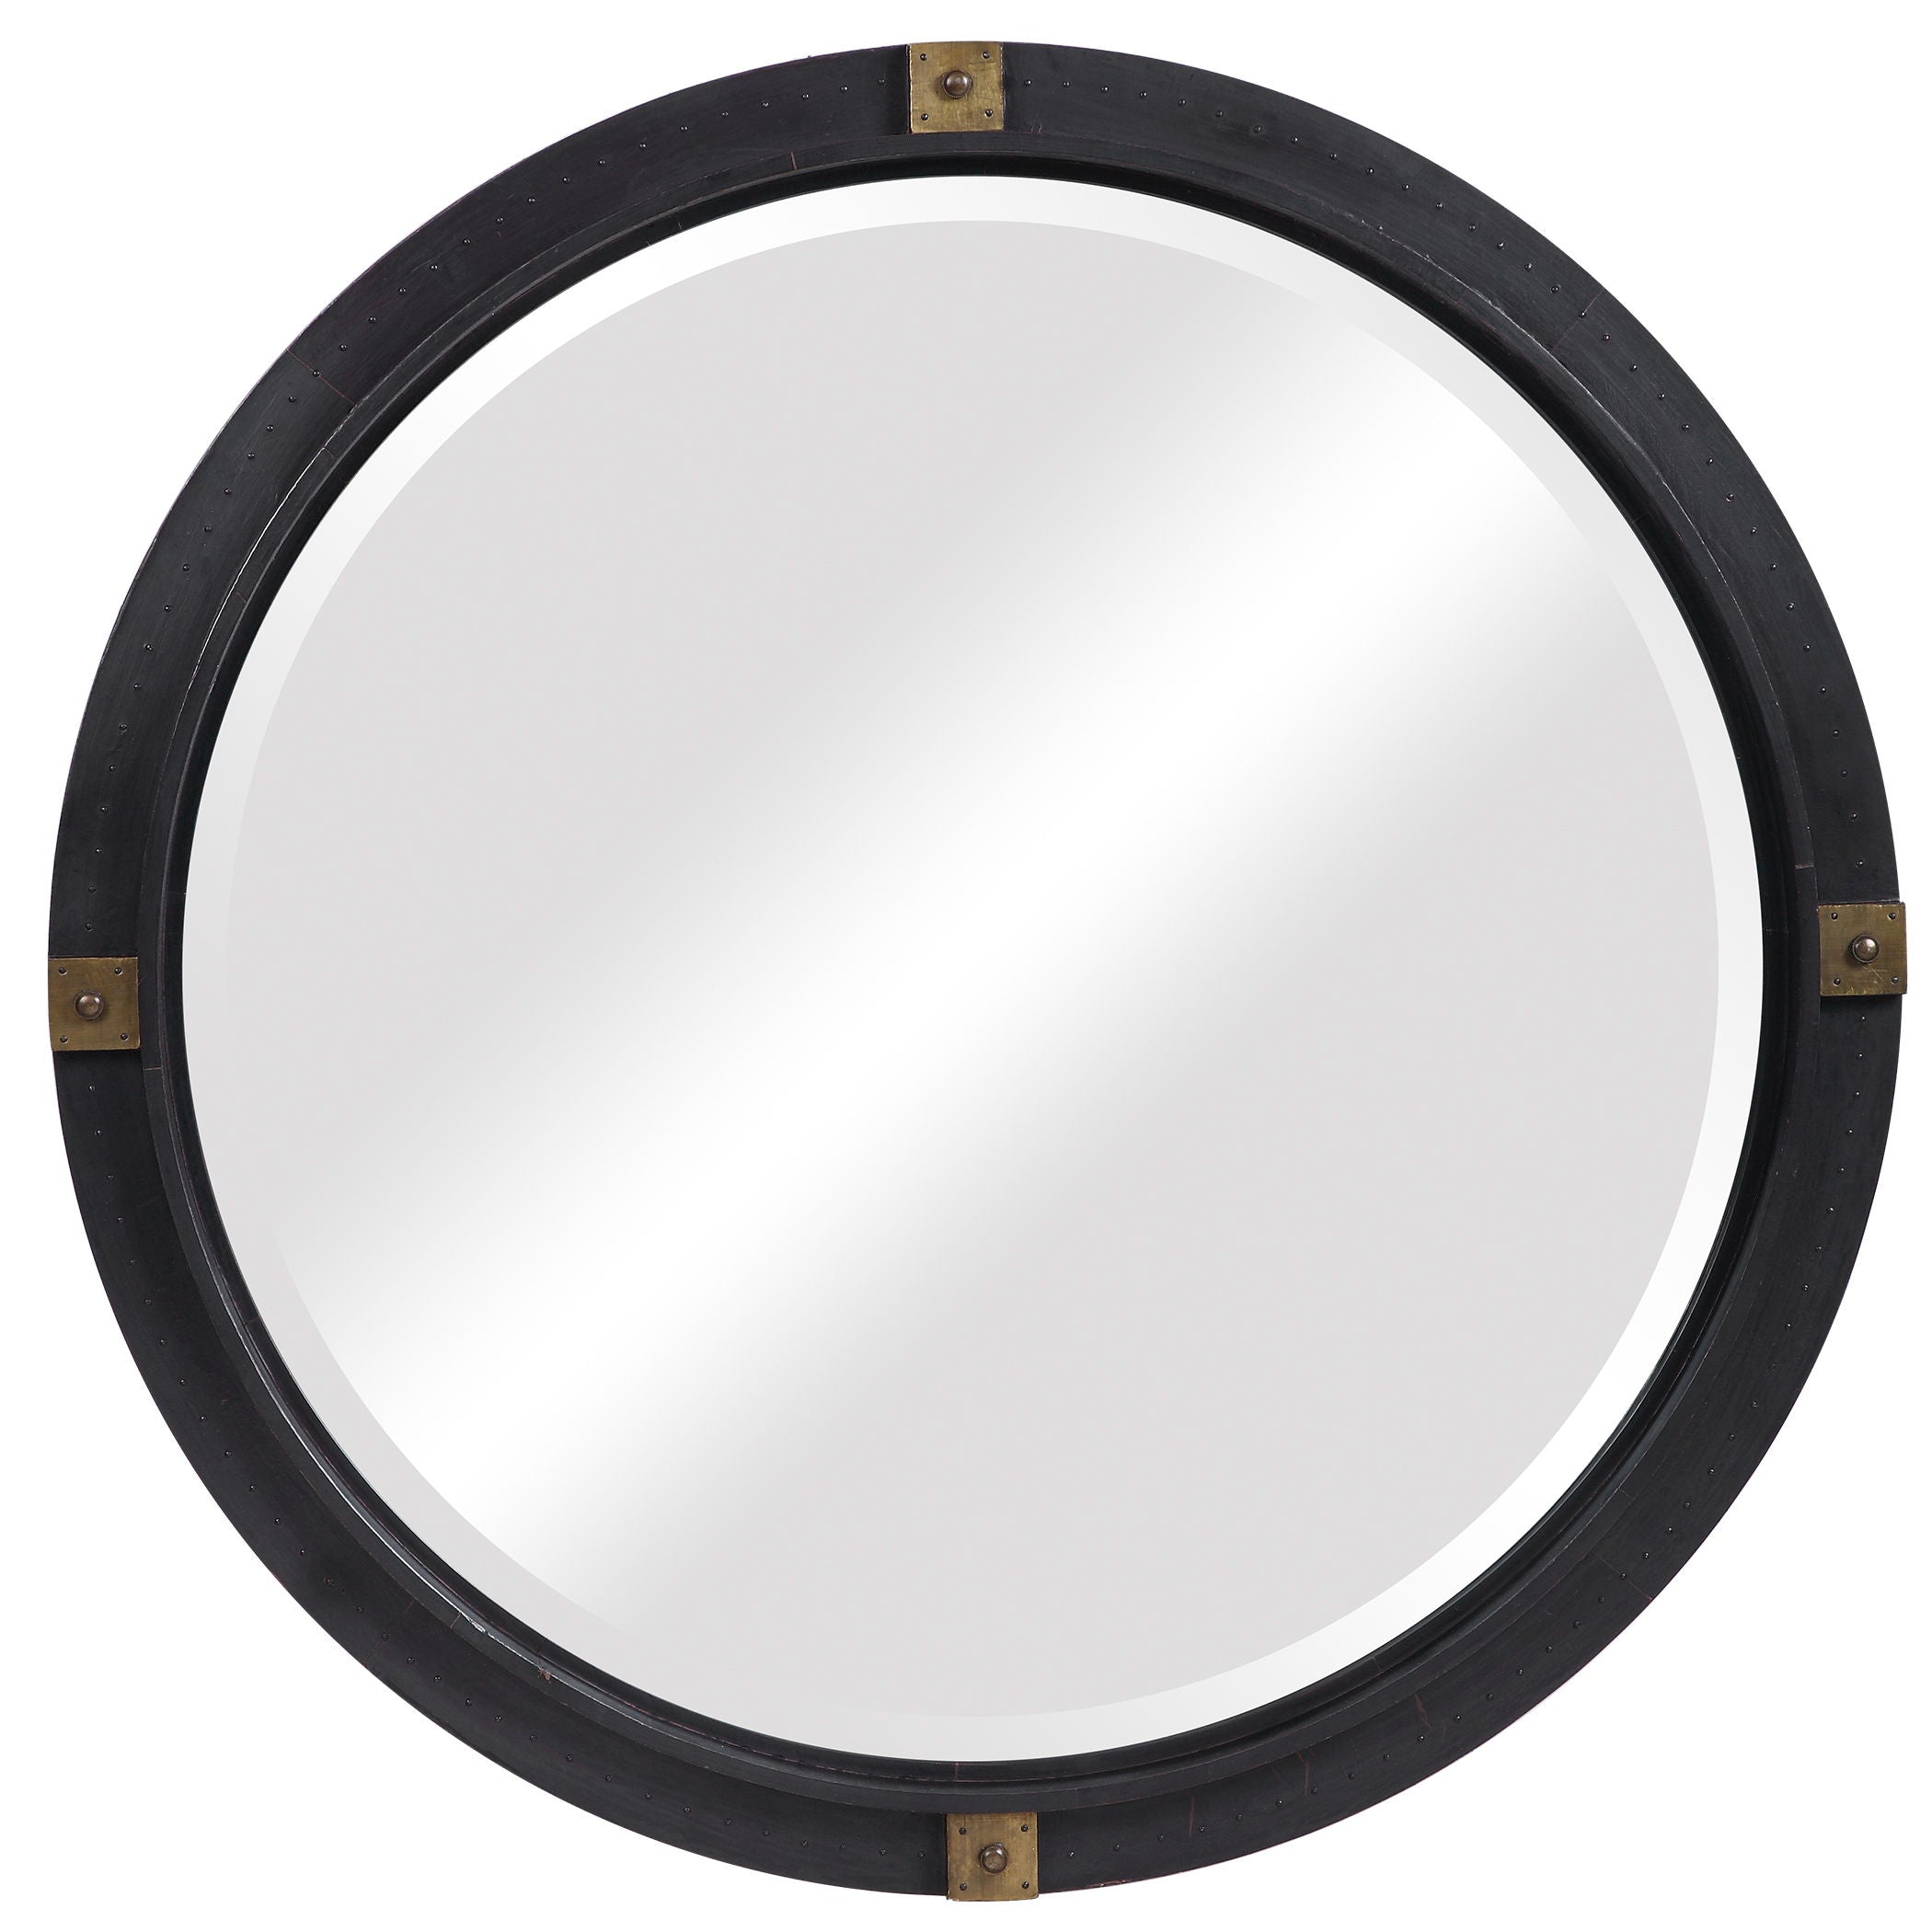 Tull - Industrial Round Mirror - Black